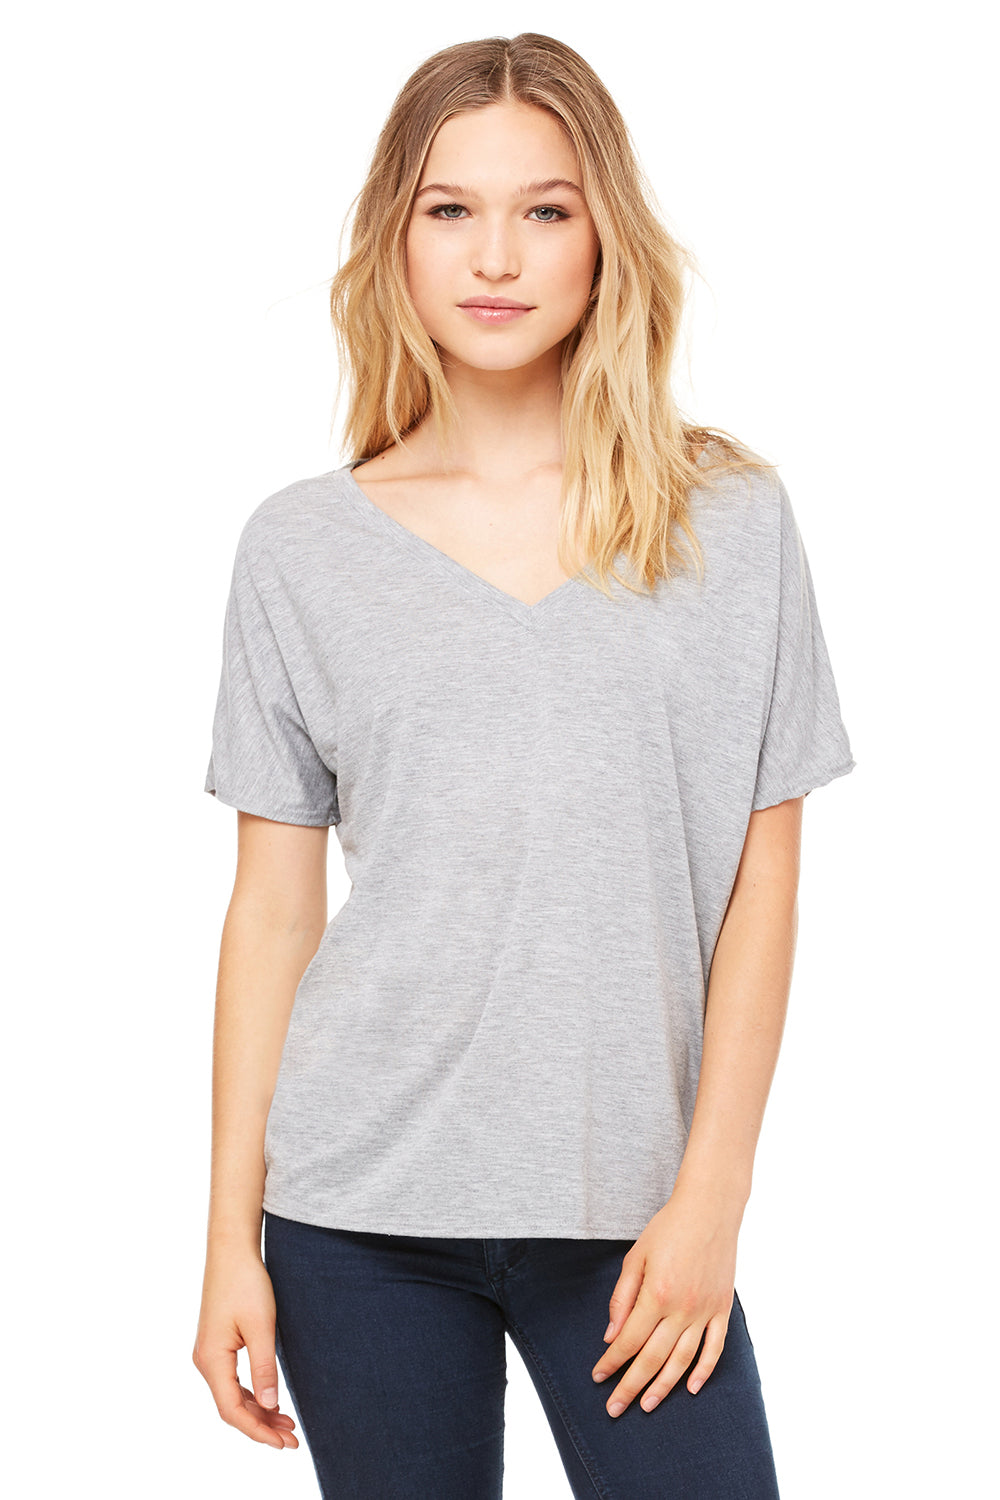 Bella + Canvas 8815 Womens Slouchy Short Sleeve V-Neck T-Shirt Heather Grey Model Front